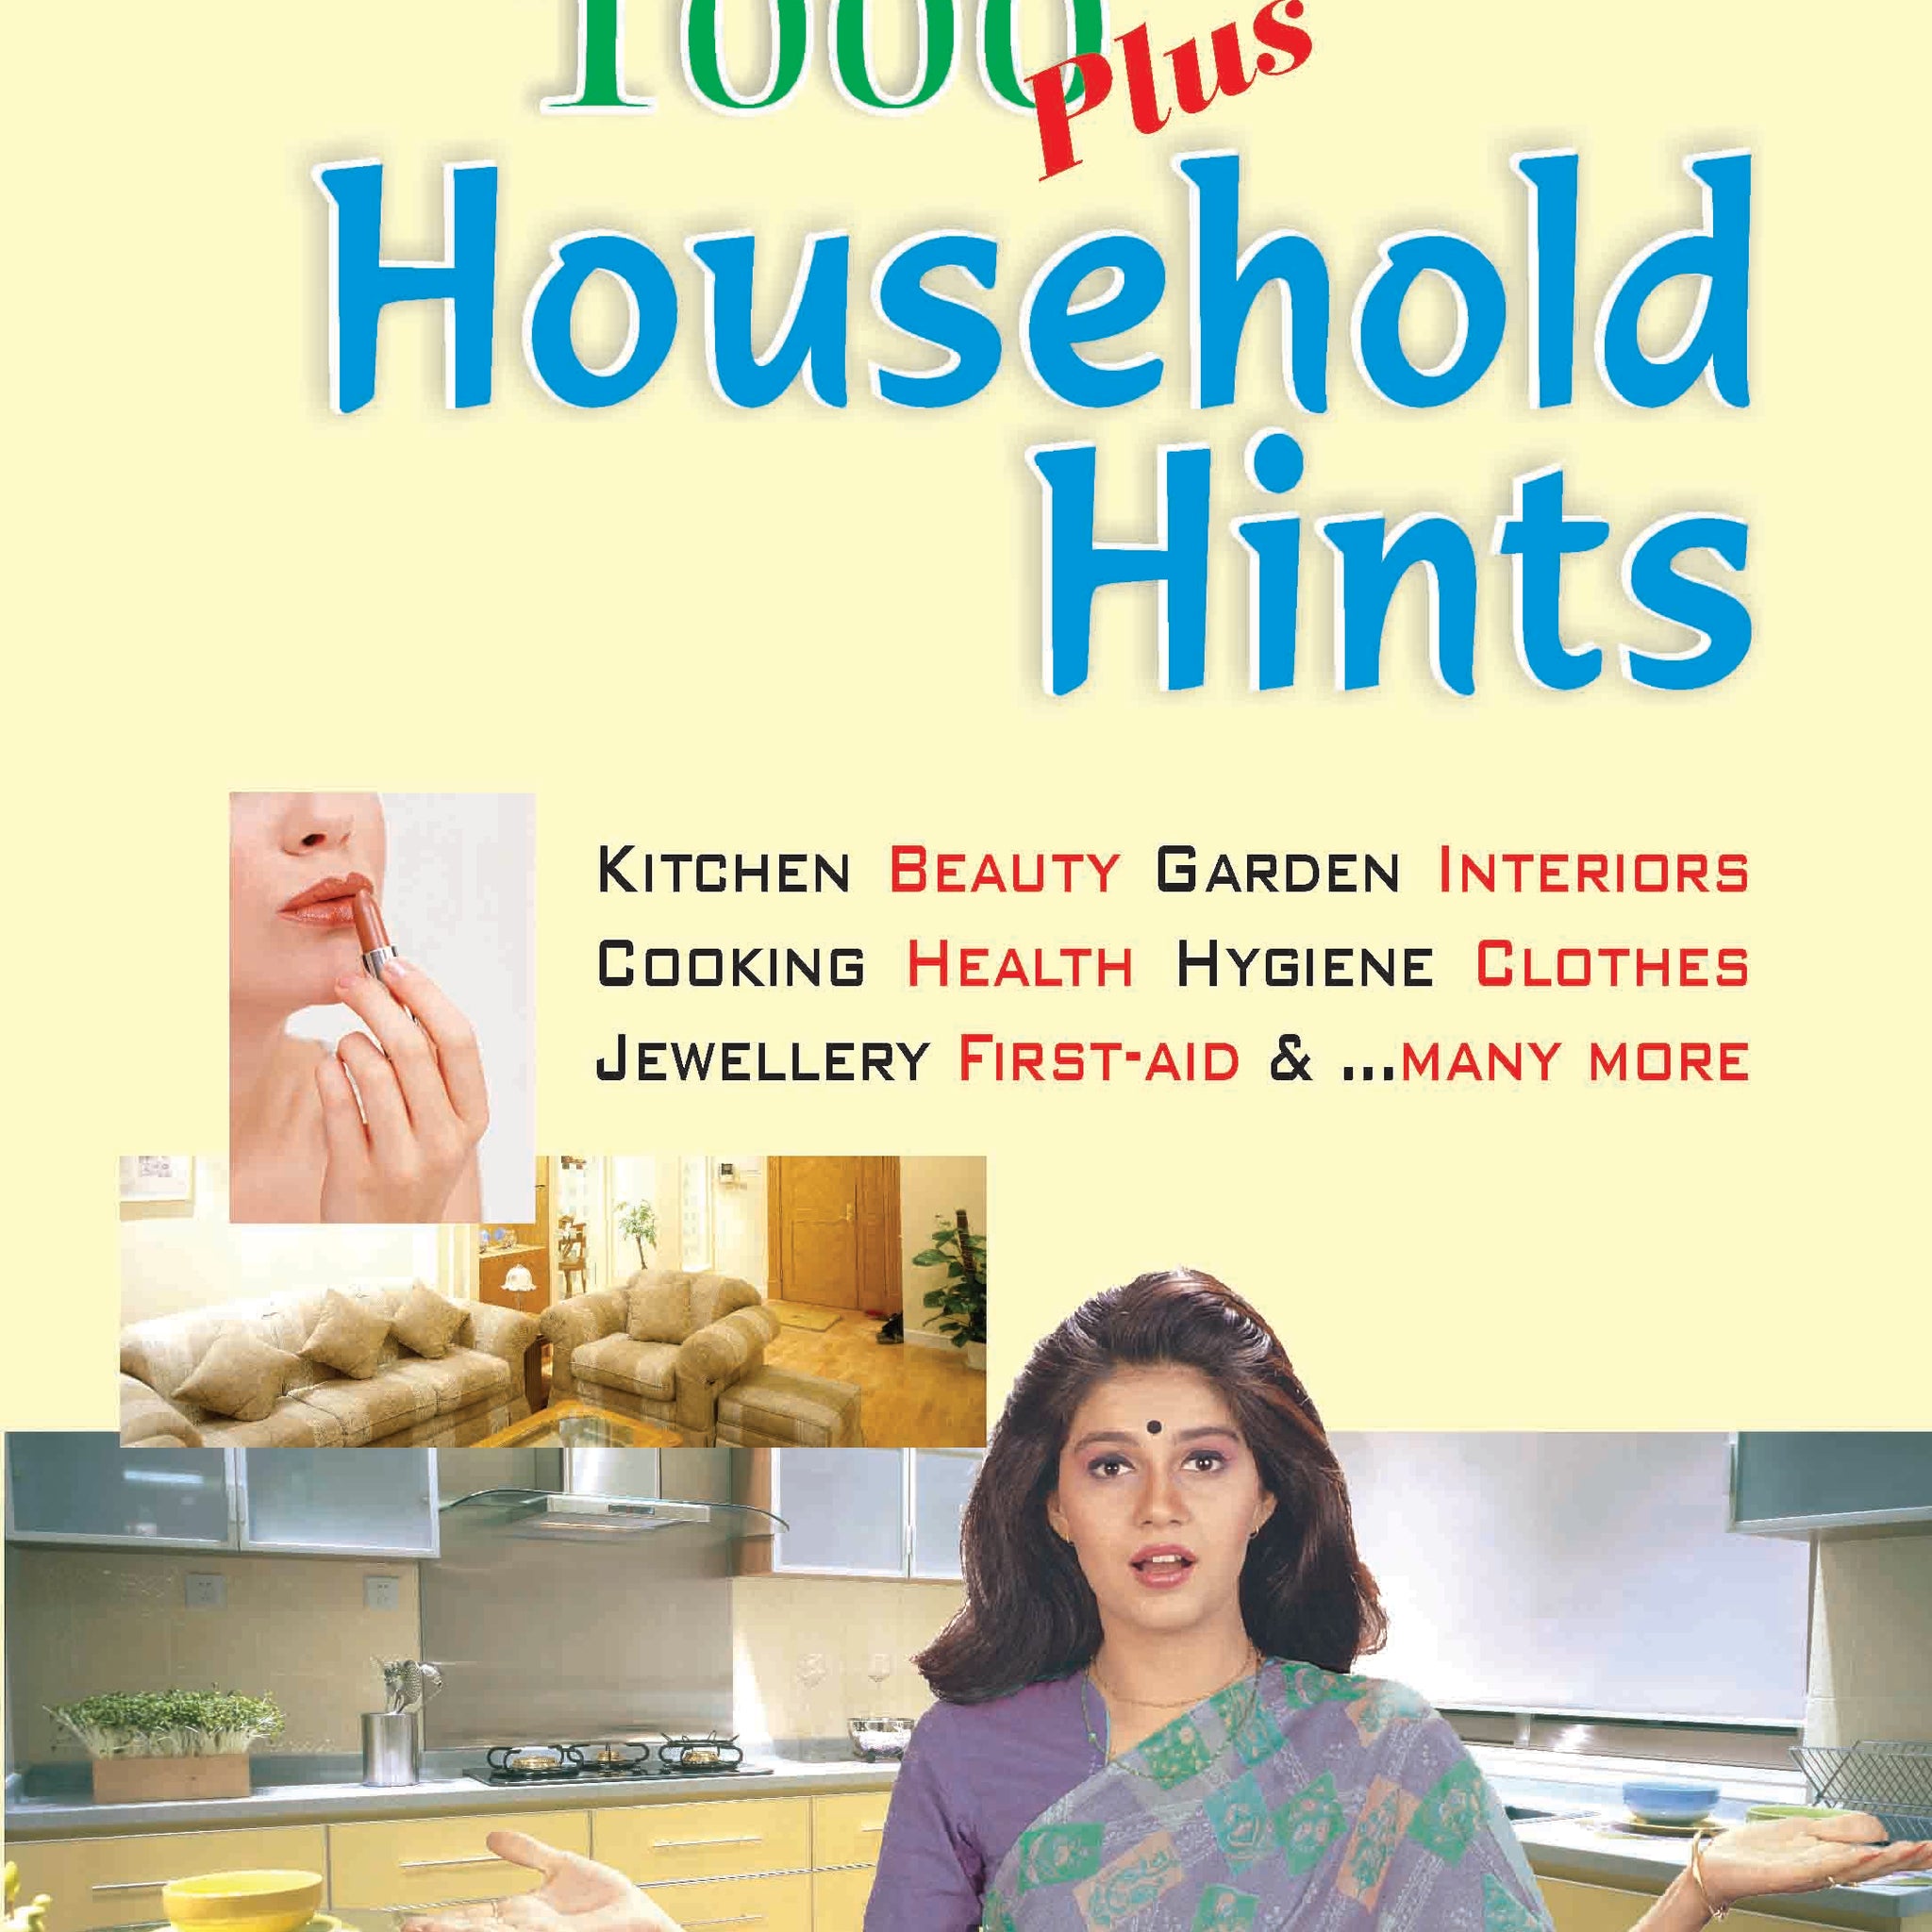 1000 Plus Household Hints